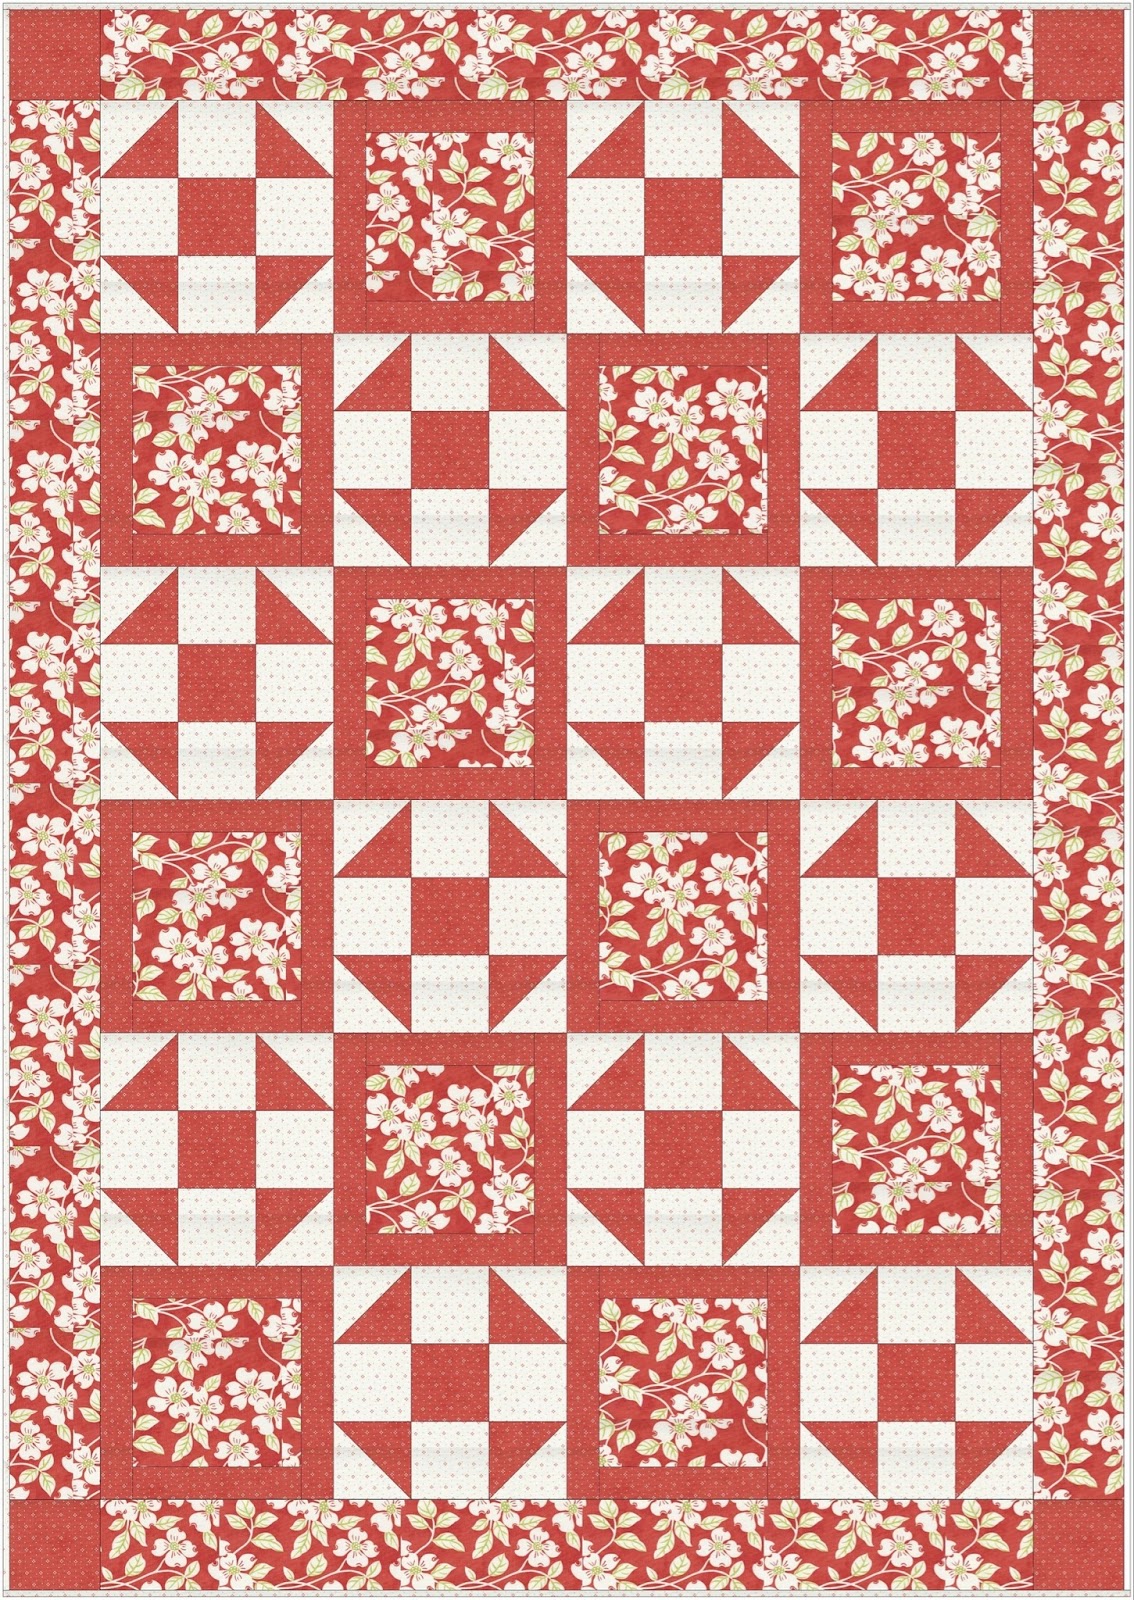 Heartland 3-Yard Quilt Patterns 